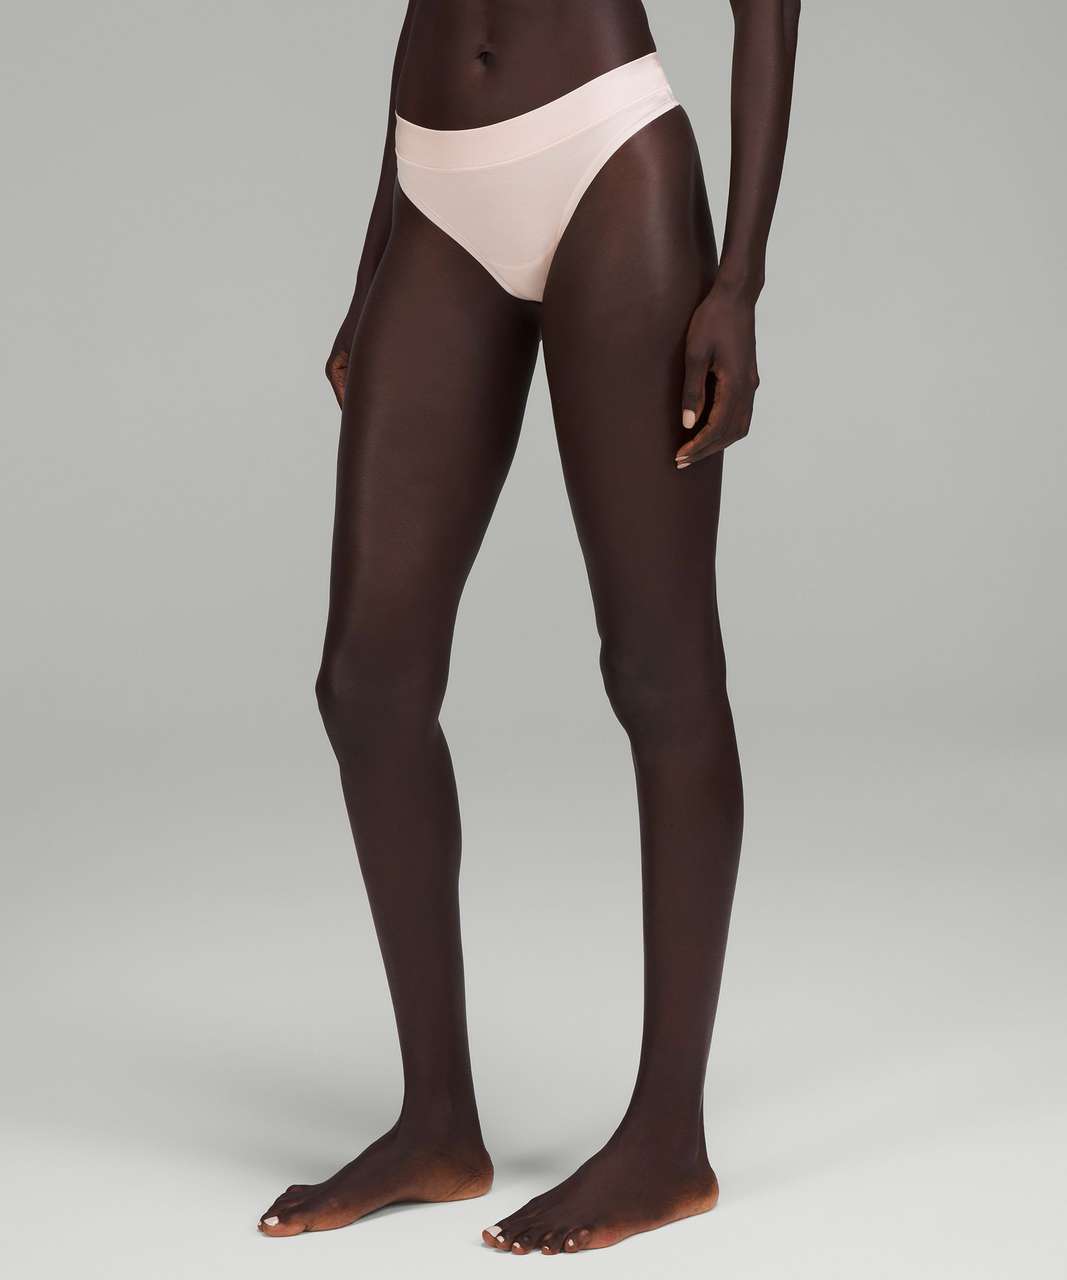 Lululemon UnderEase Mid-Rise Thong Underwear 5 Pack - Black